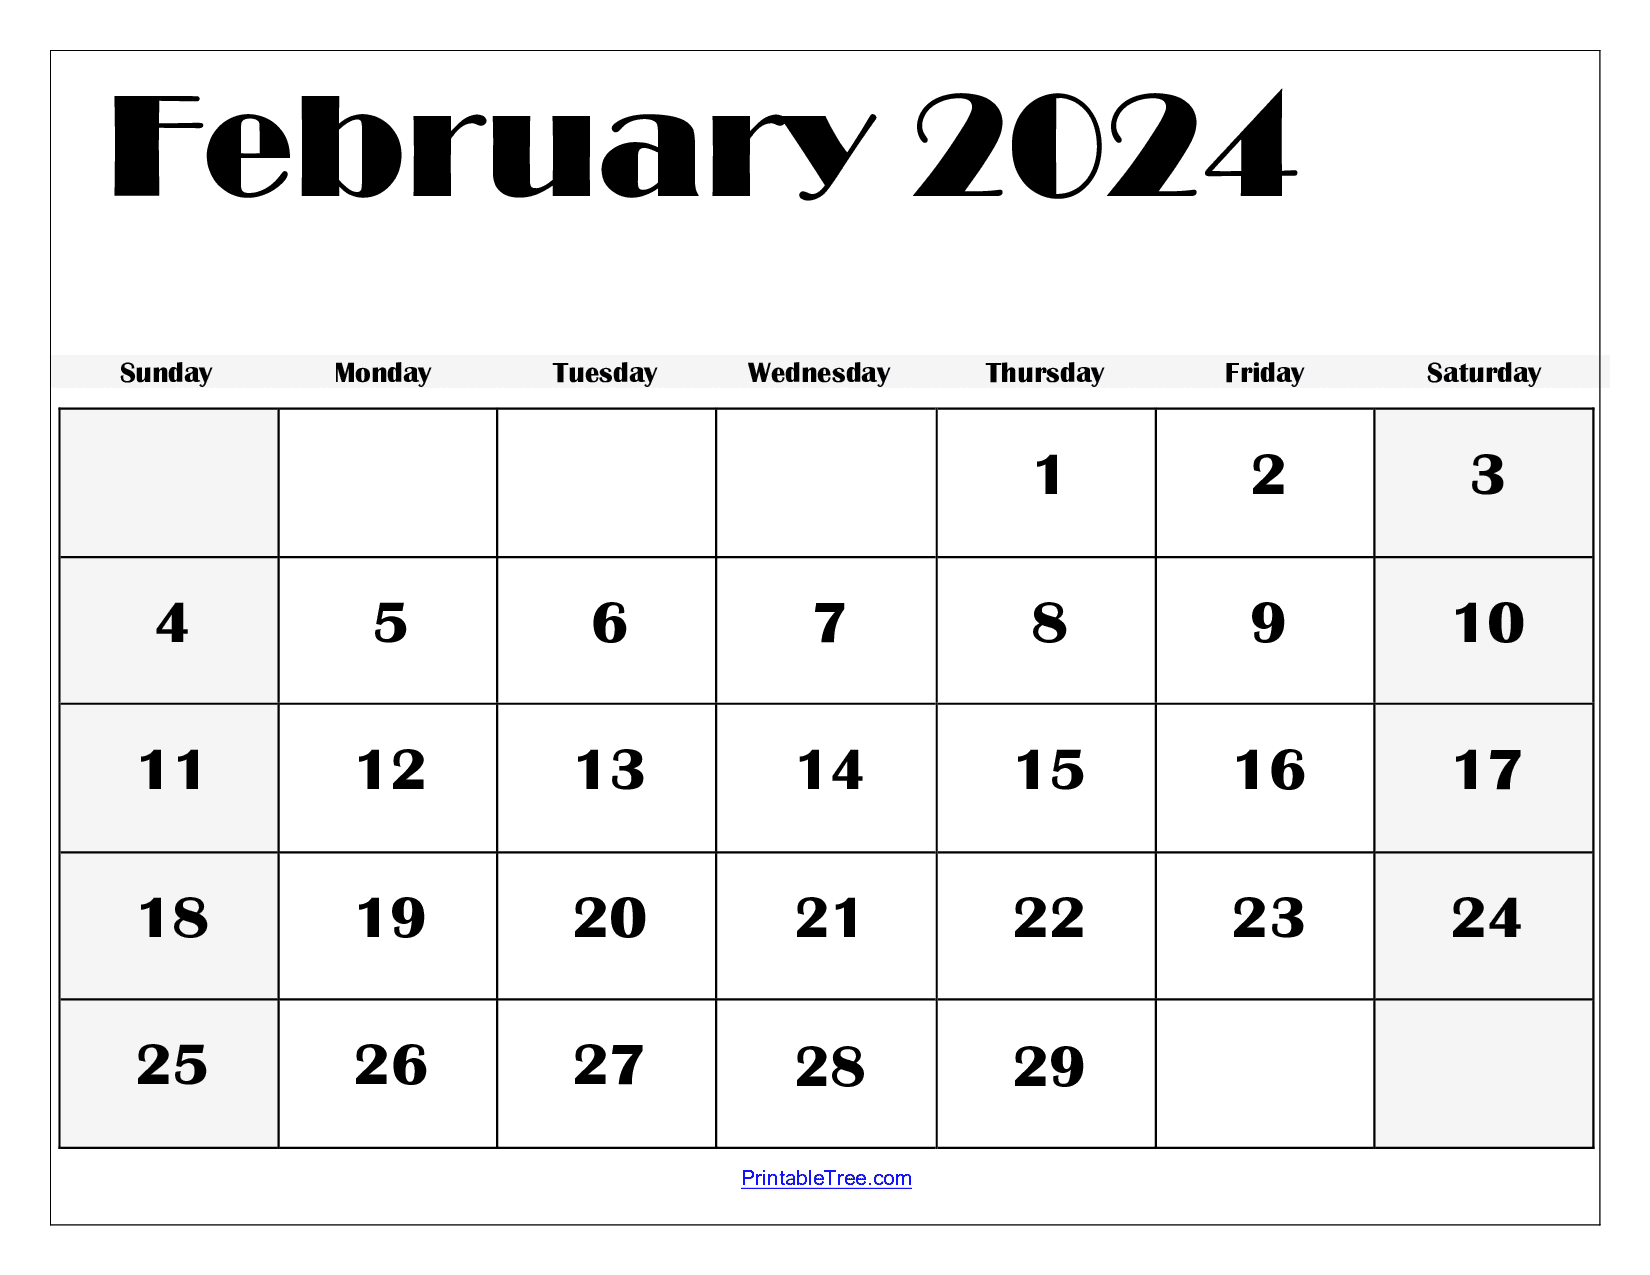 February 2024 Calendar Printable Pdf Template With Holidays for Blank February 2024 Calendar Free Printable